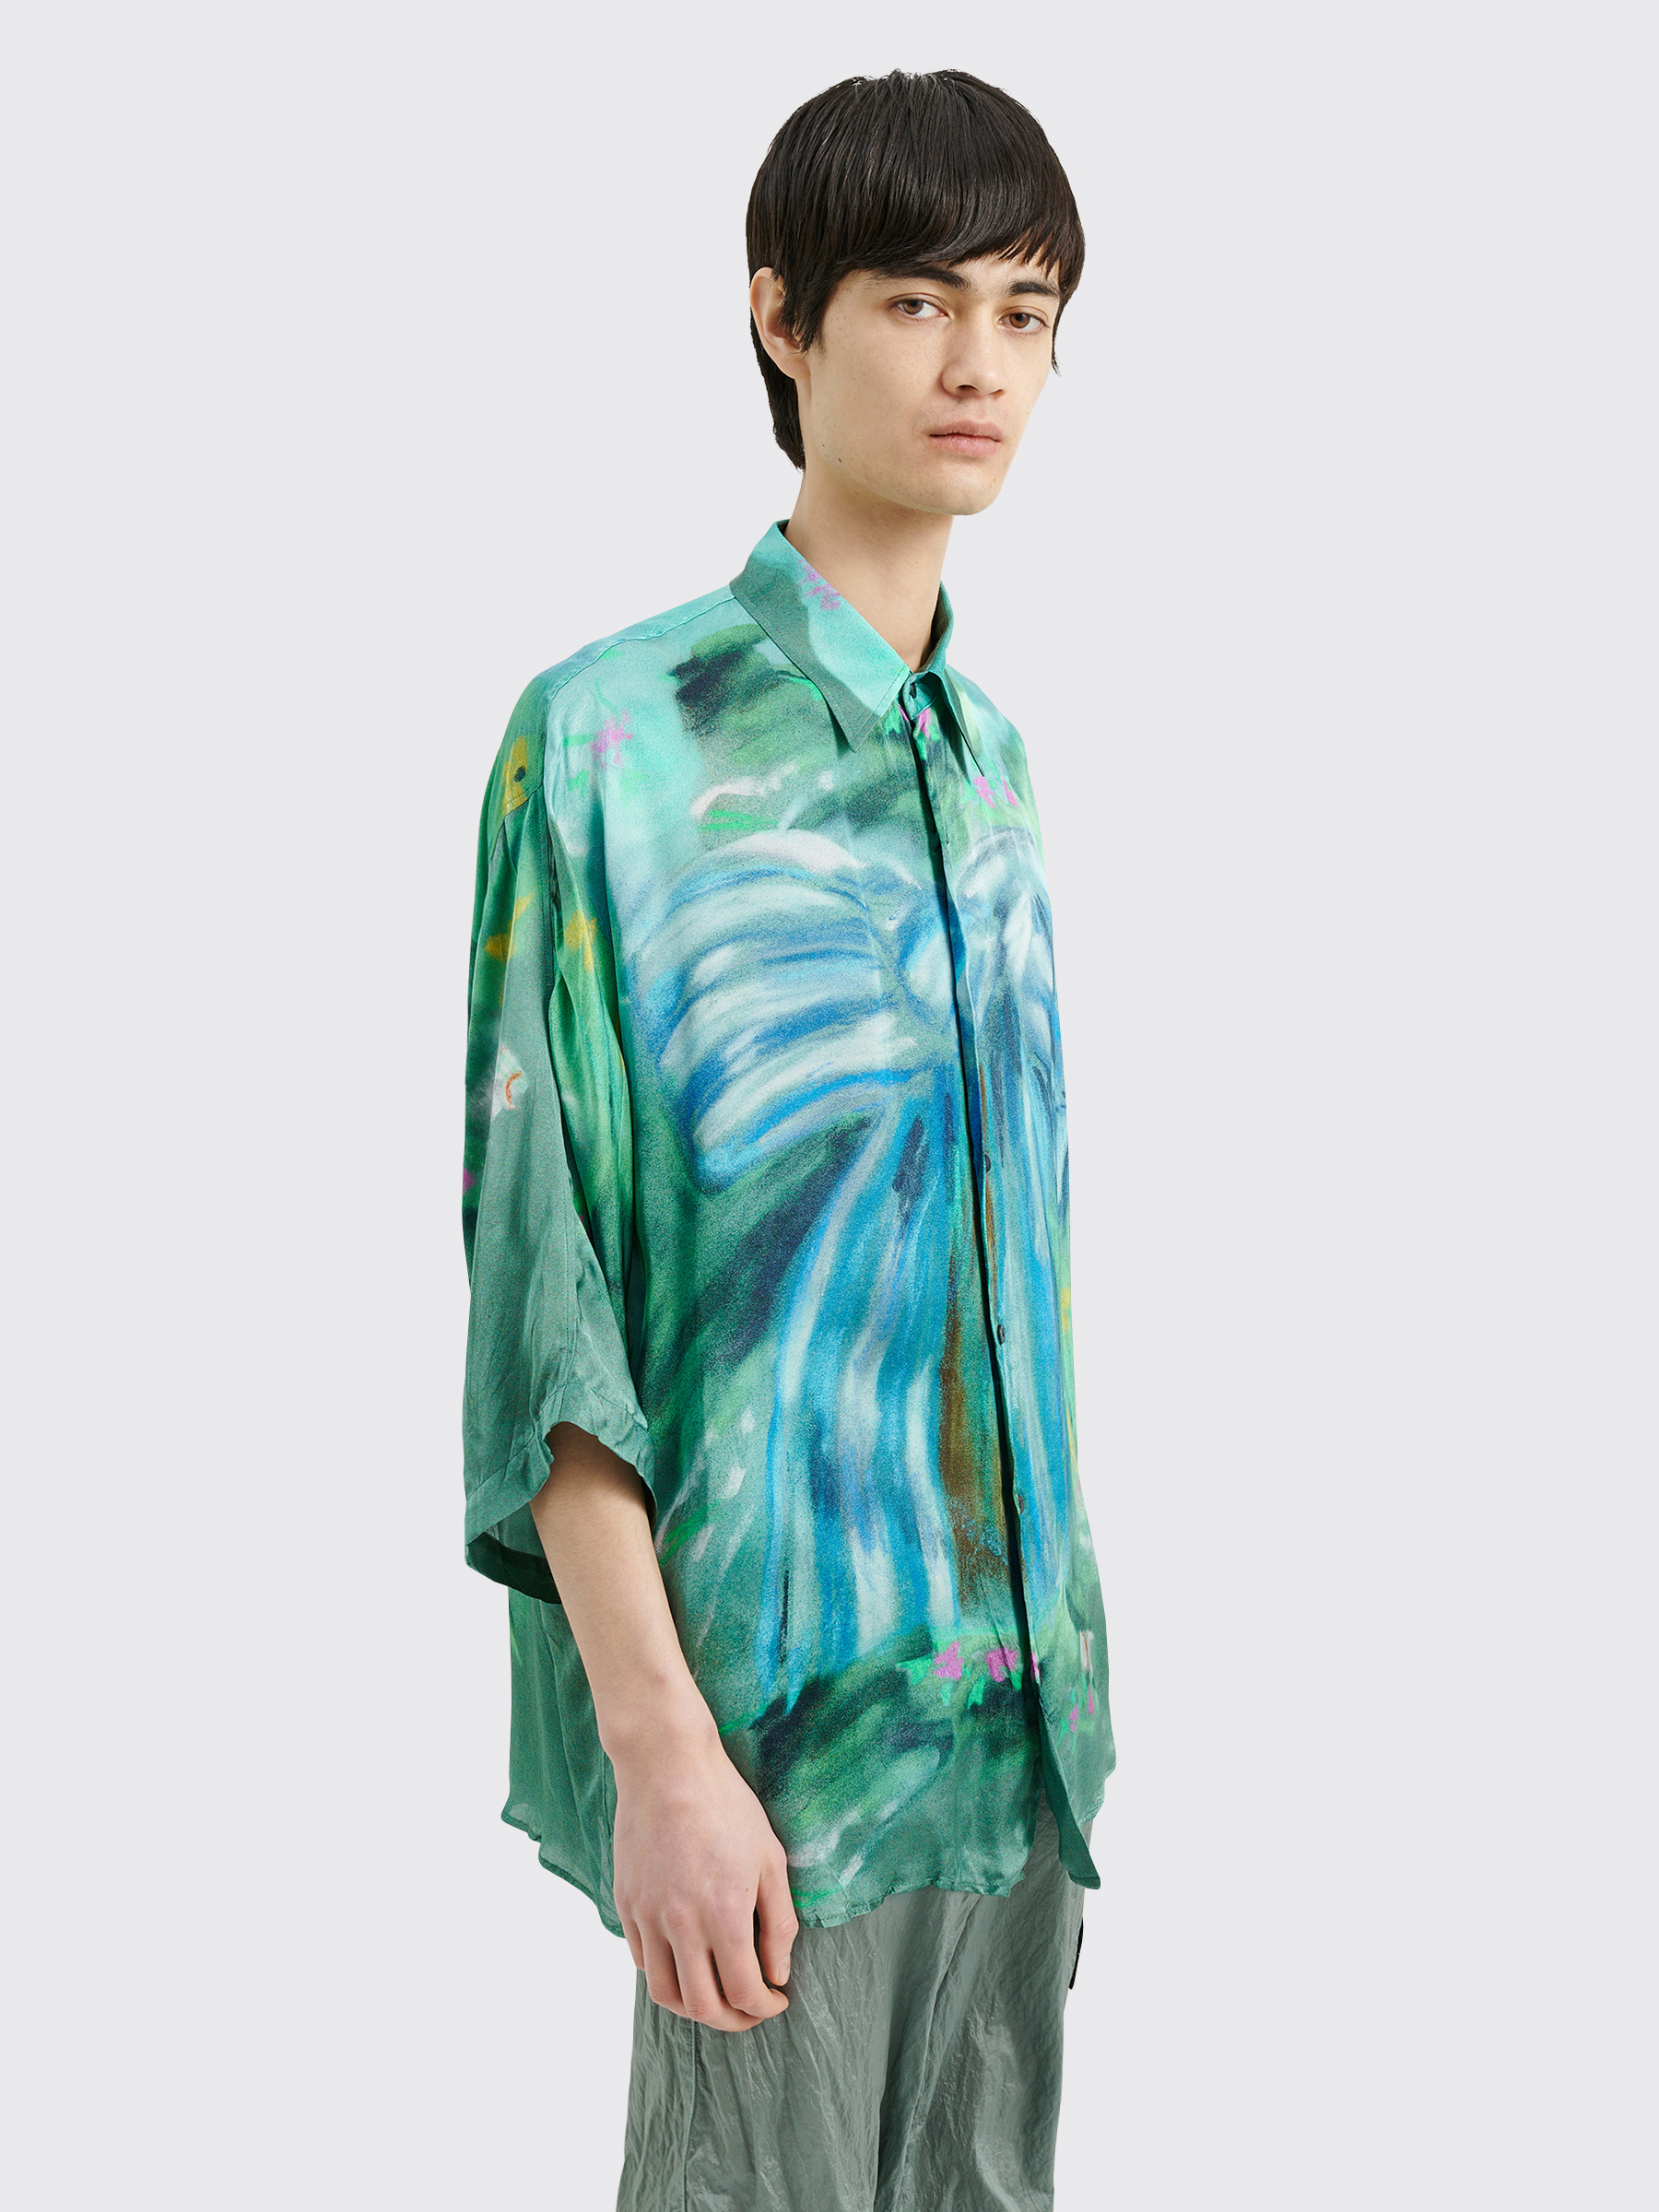 Très Bien - Acne Studios Printed Viscose Shirt Sage Green / Light Blue